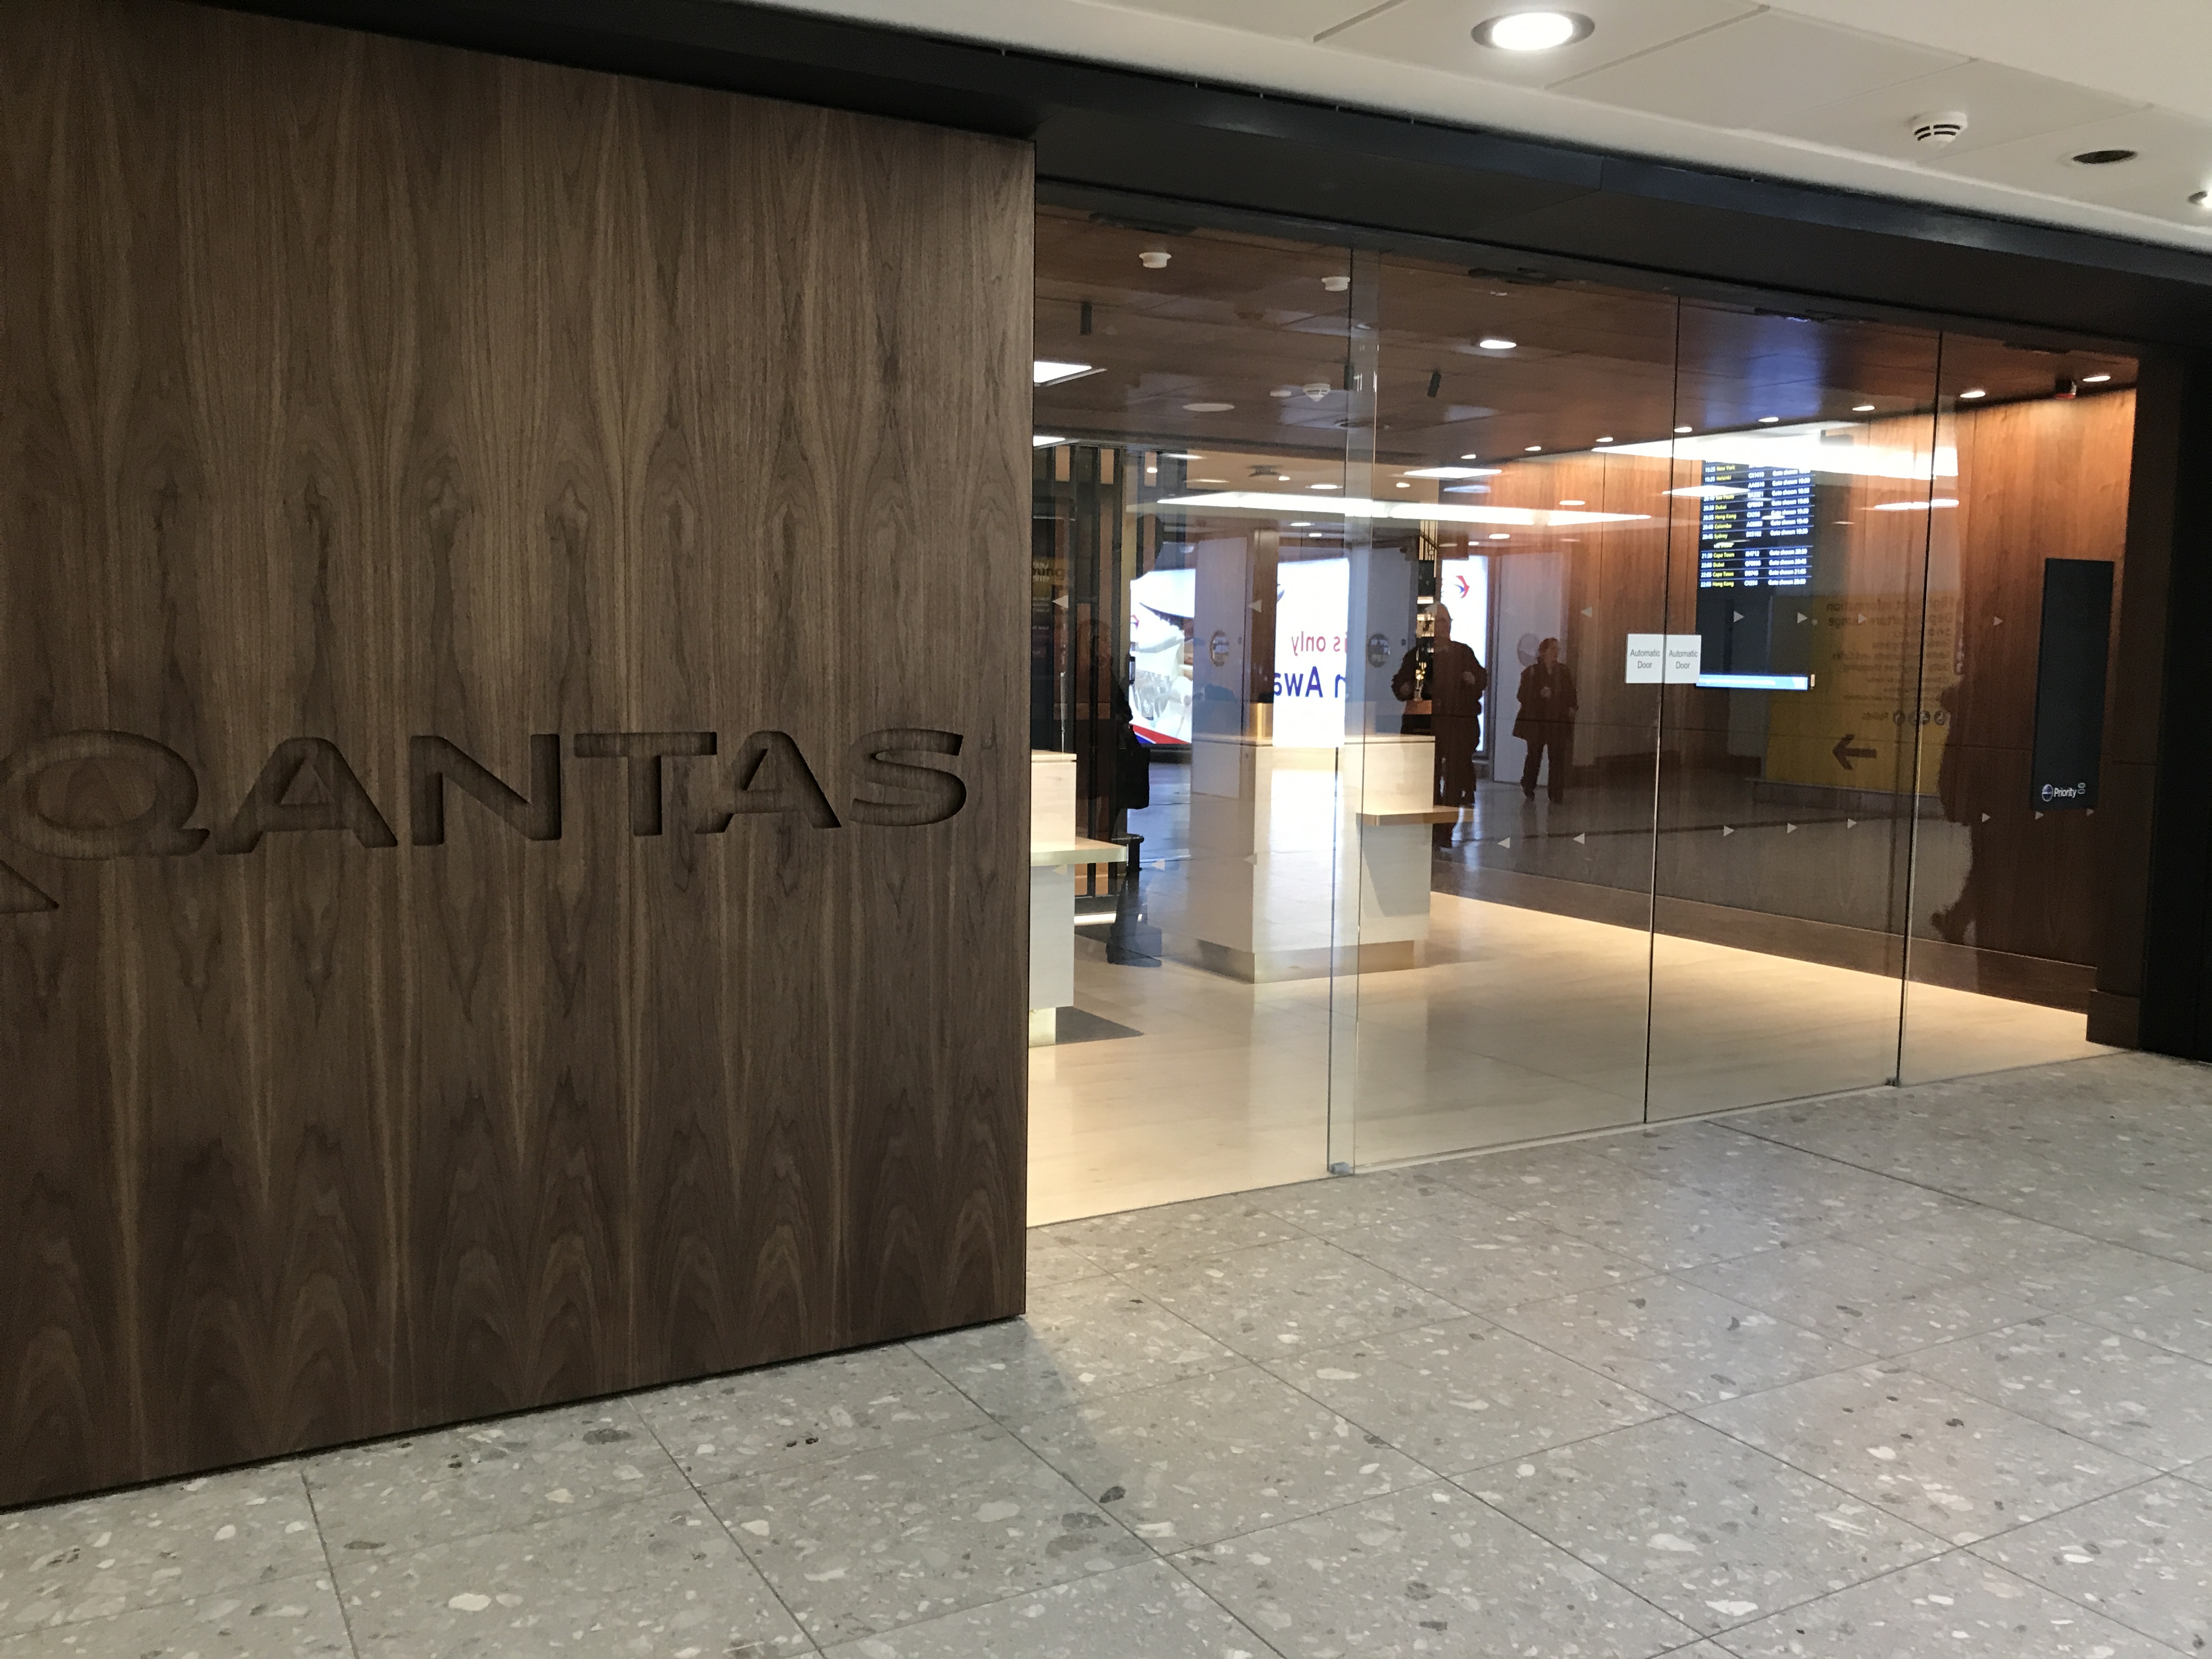 Qantas business & first class new lounge at Heathrow